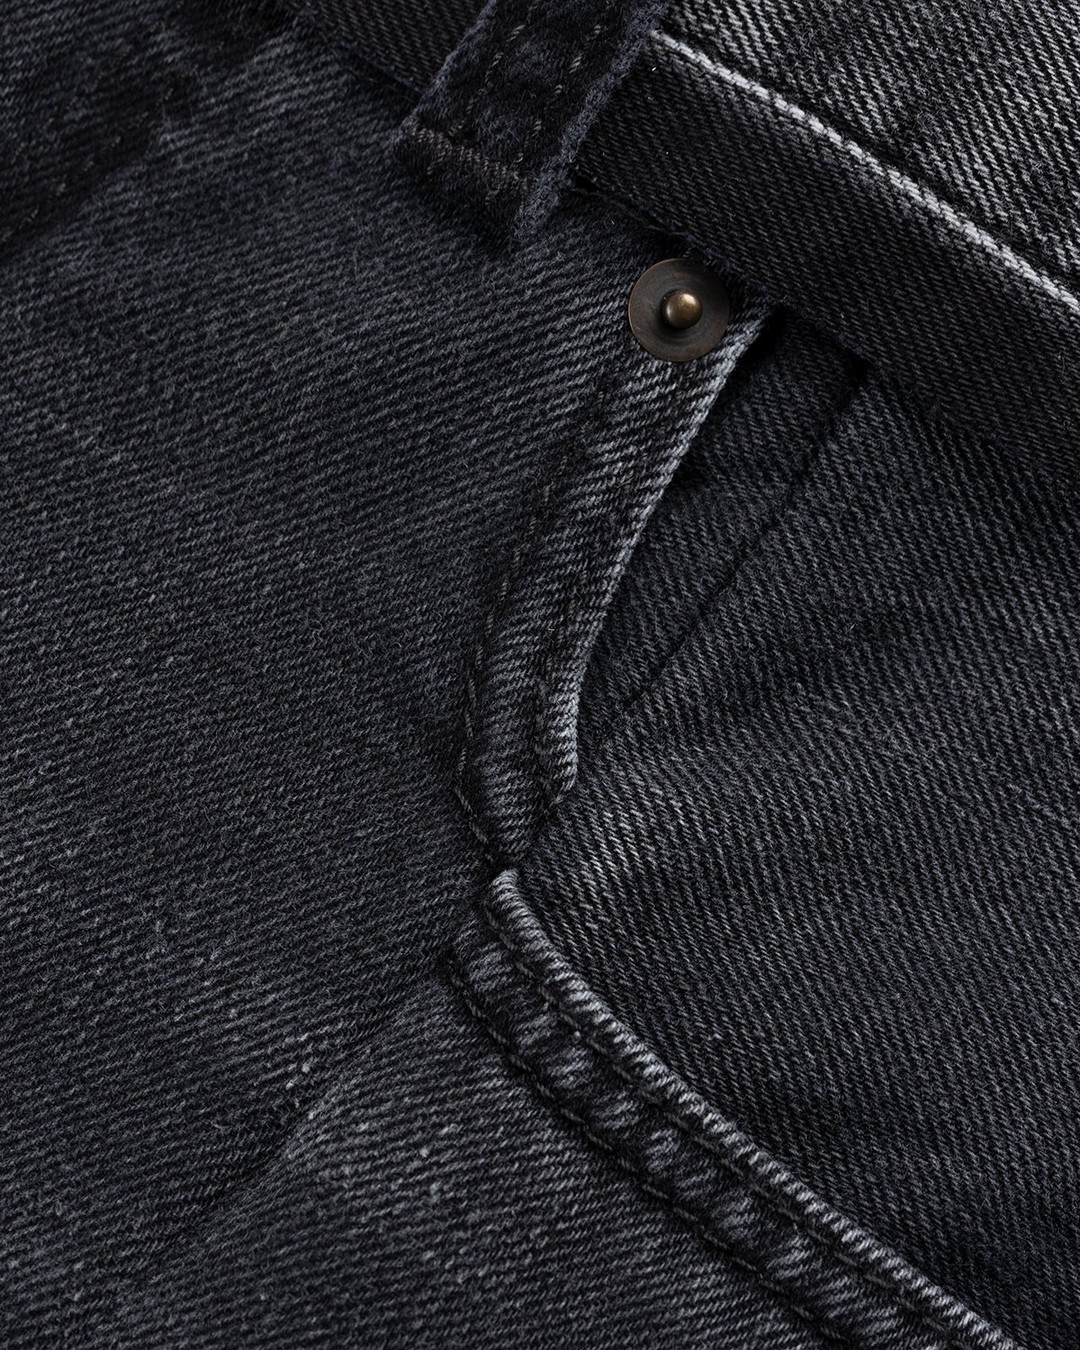 Maison Margiela – Spliced Jeans Black - Denim - Black - Image 6